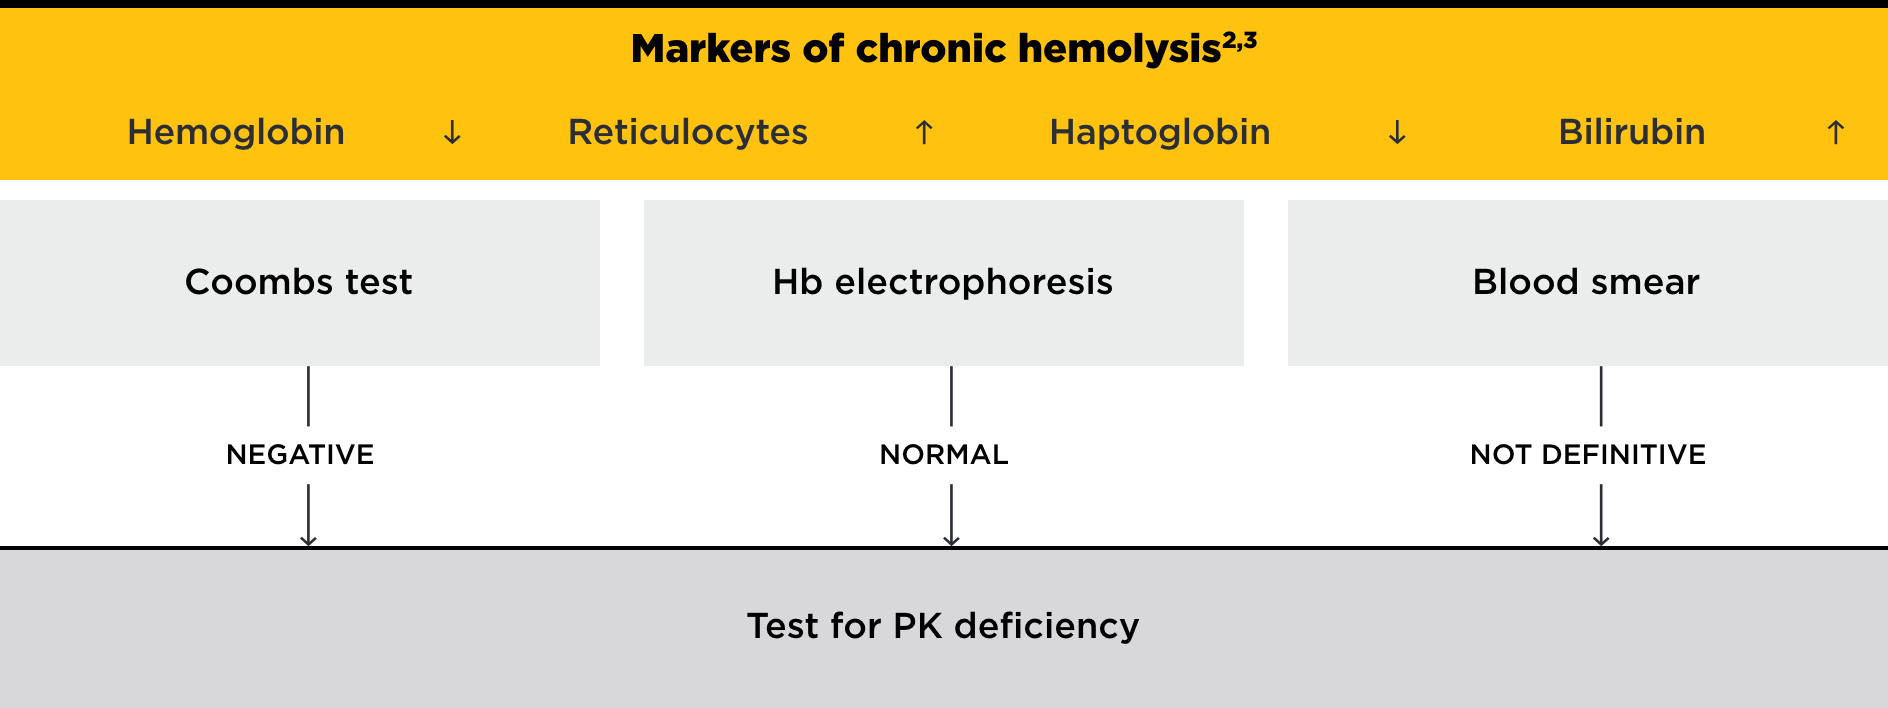 Markers of chronic hemolysis